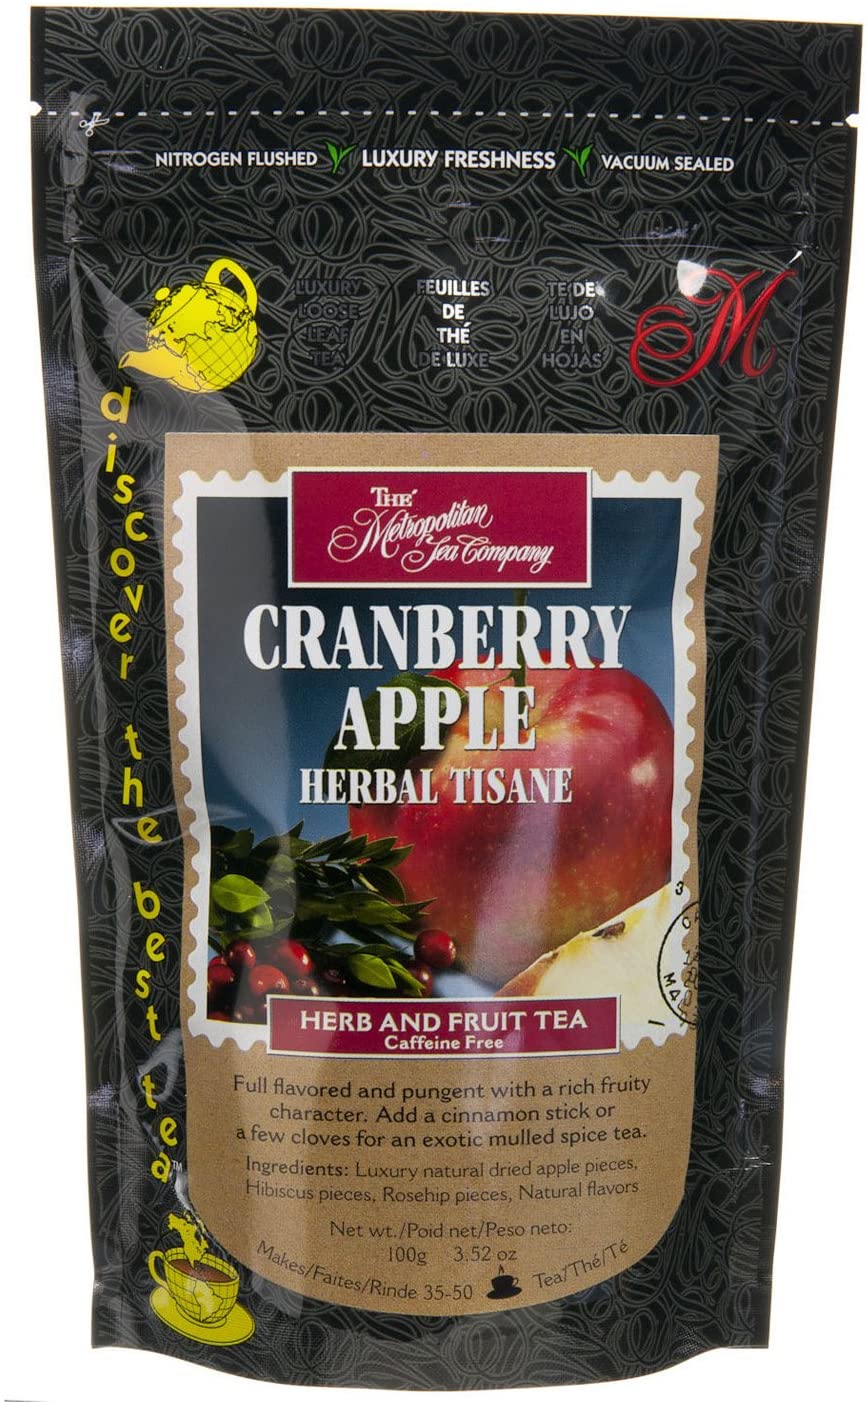 Cranberry Apple Herbal Tisane